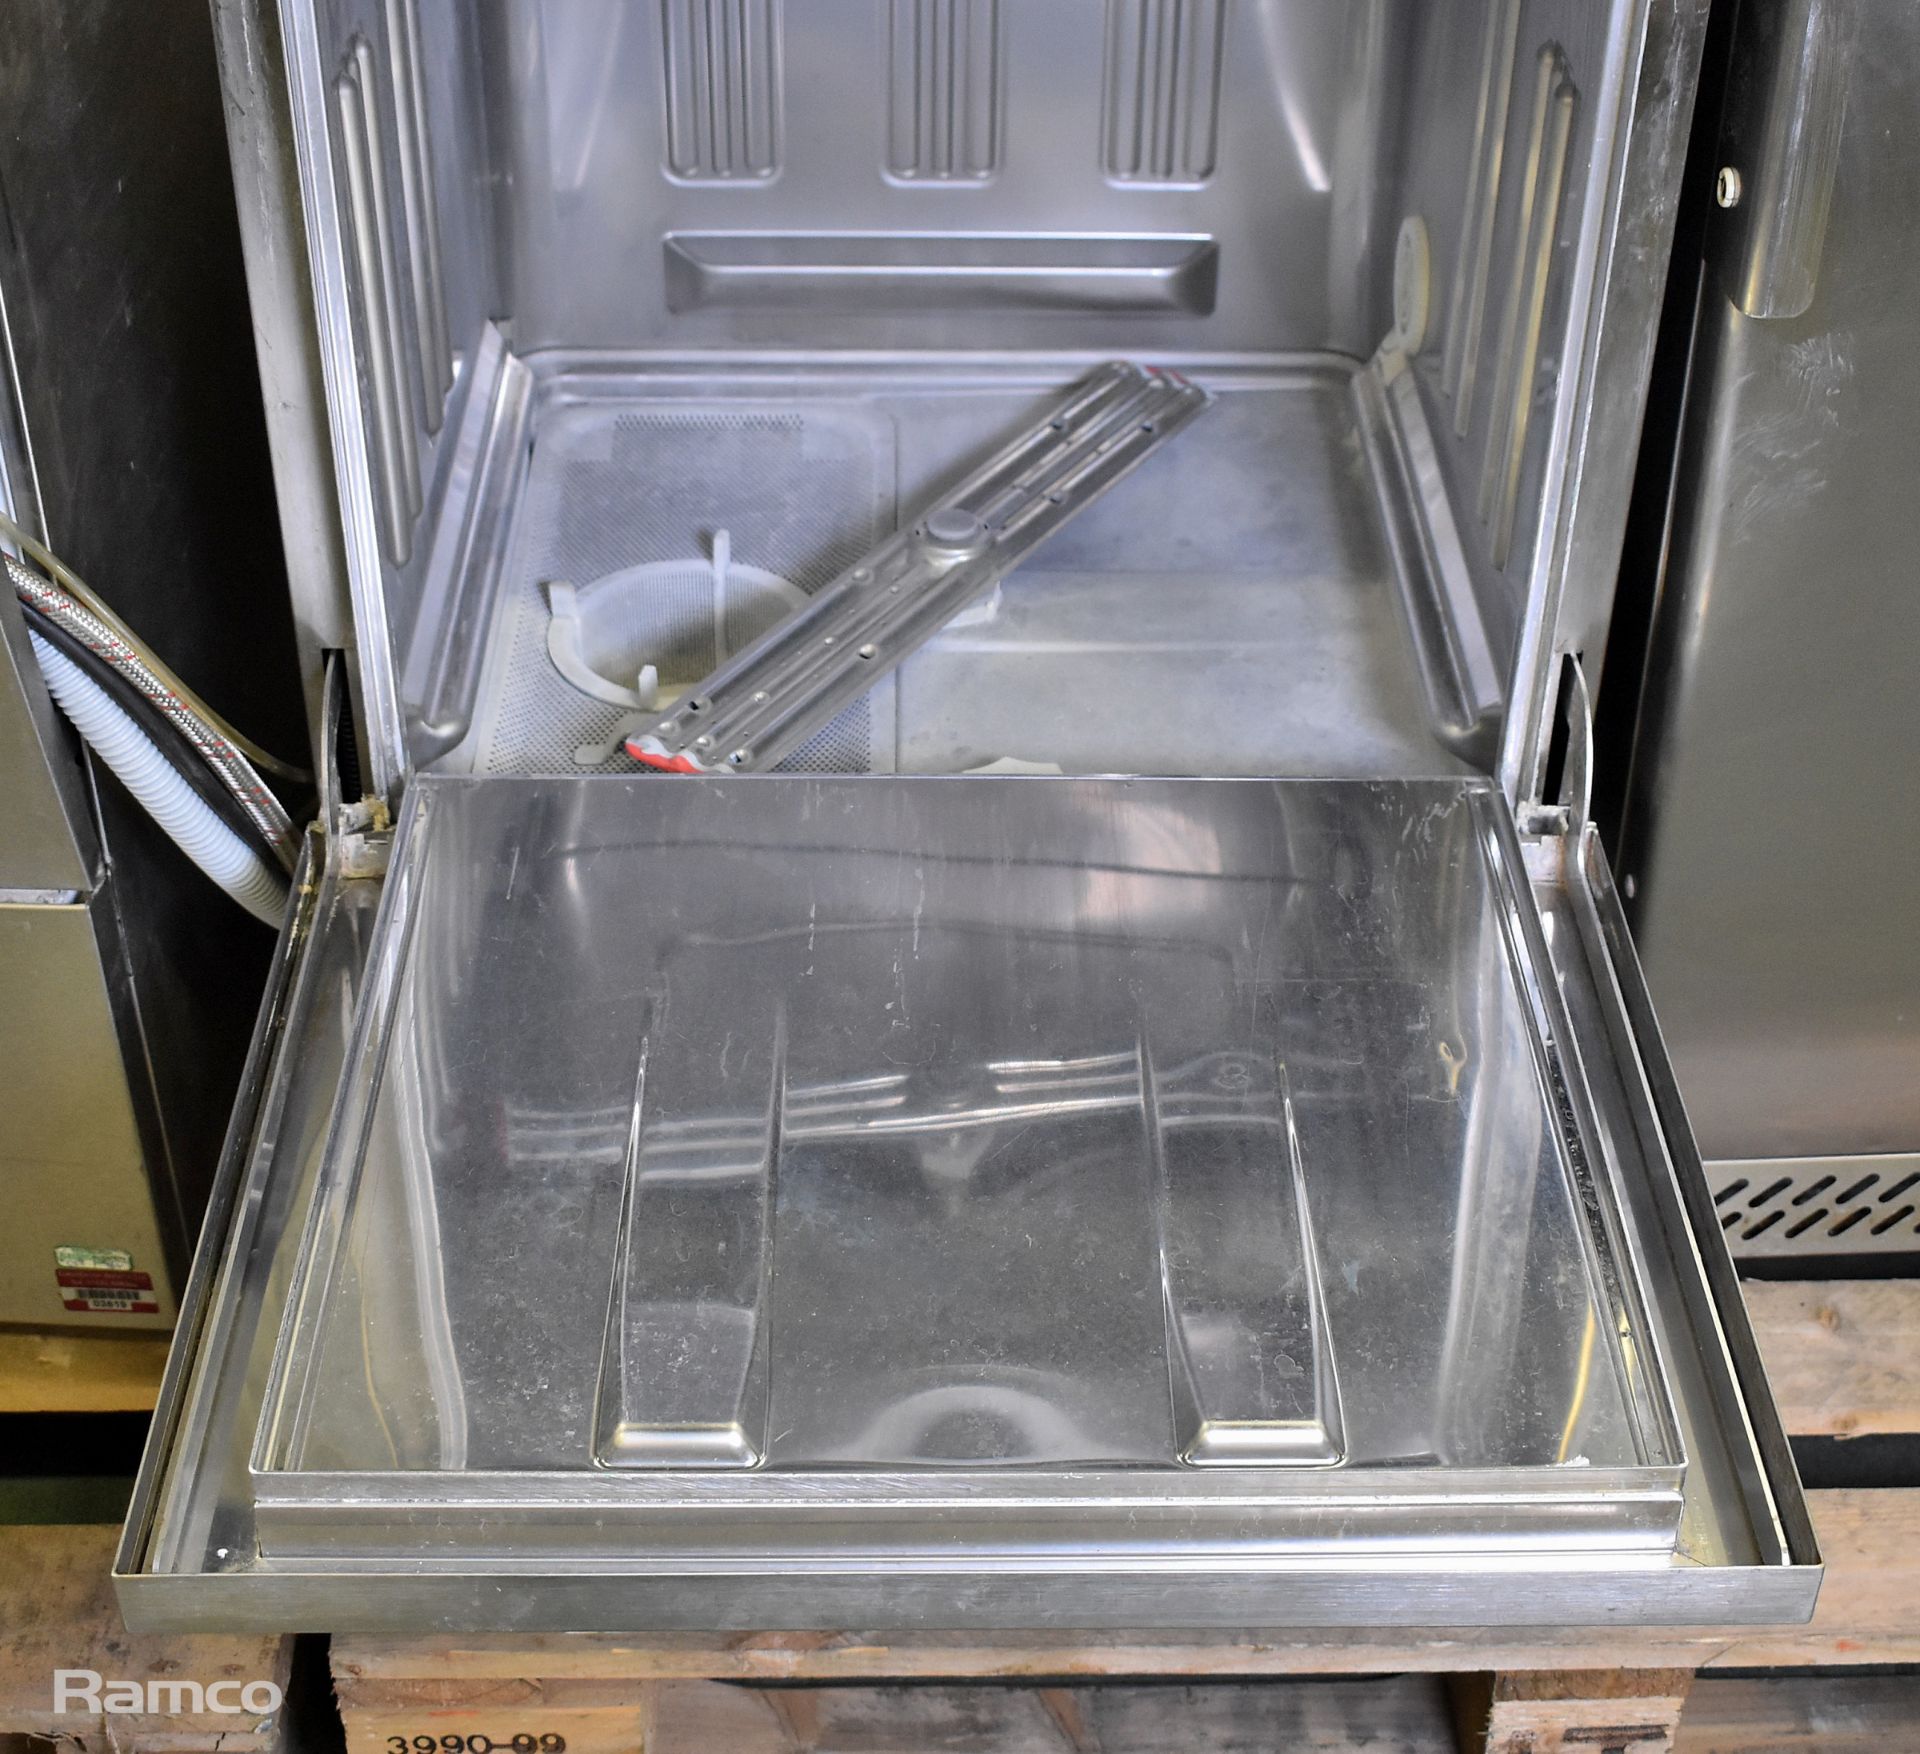 Comenda FC4EA front control under-counter dishwasher - Bild 2 aus 5